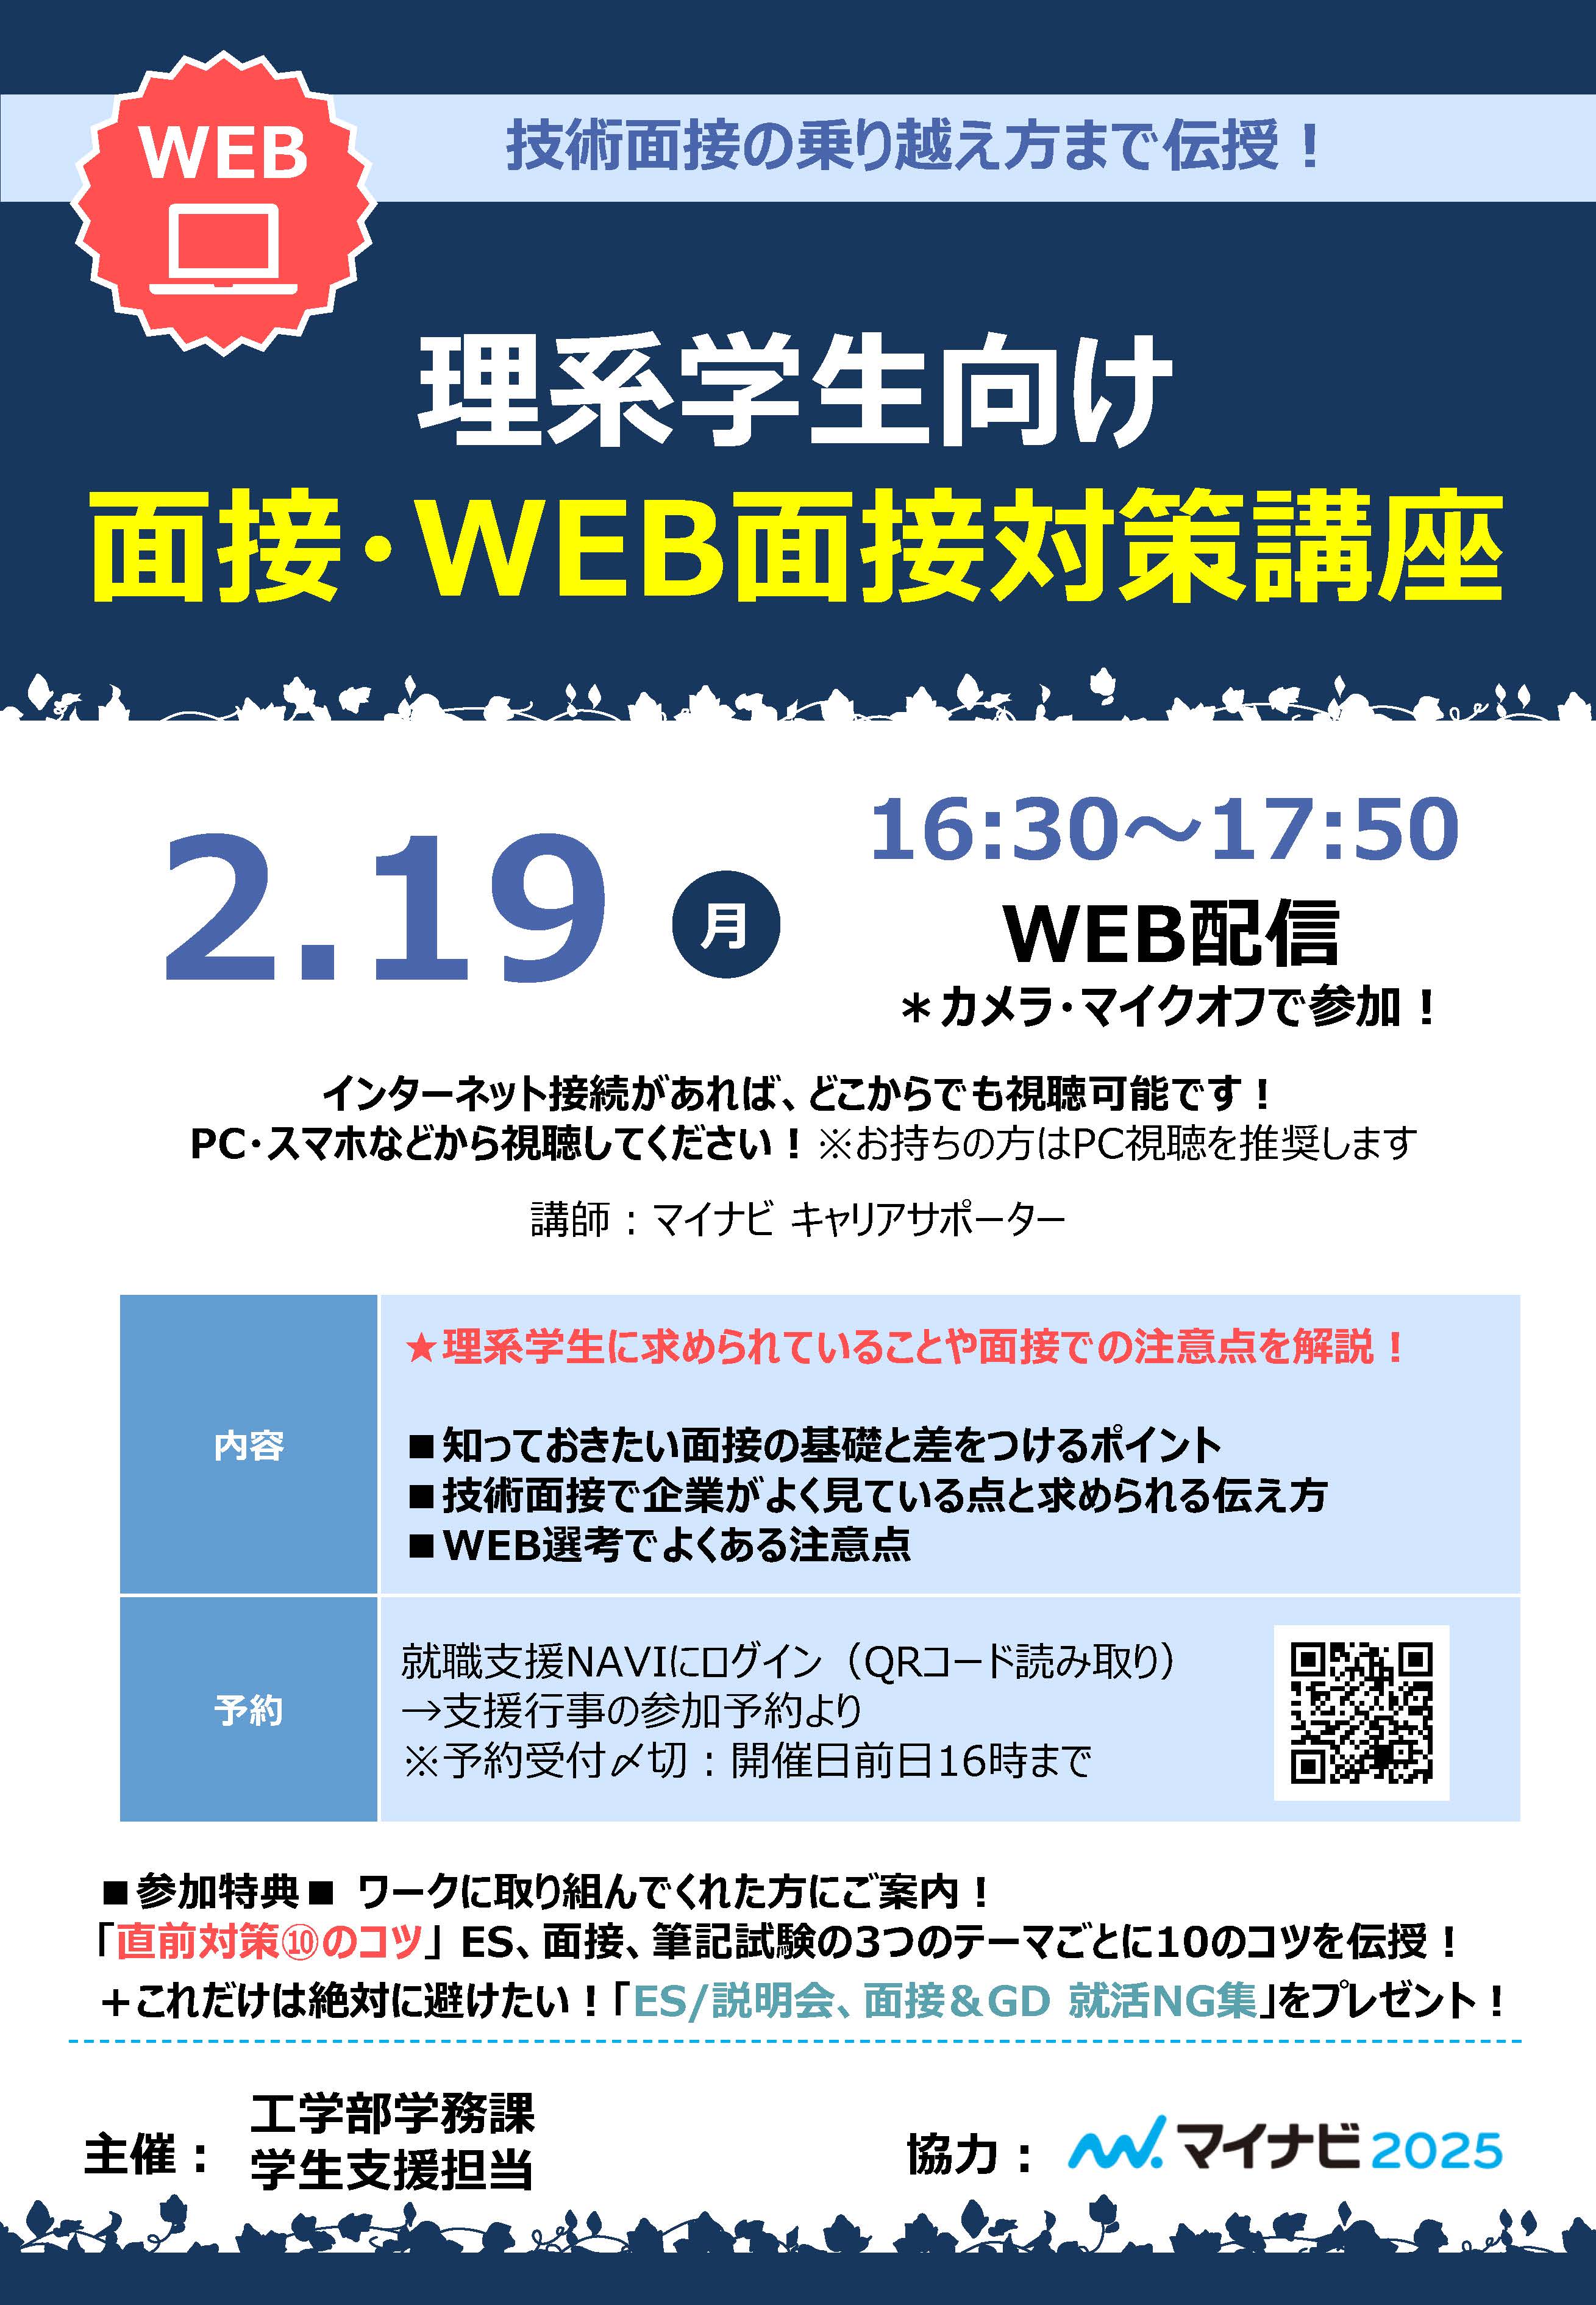 【チラシ】2月19日理系学生向け 面接・WEB面接対策講座.jpg